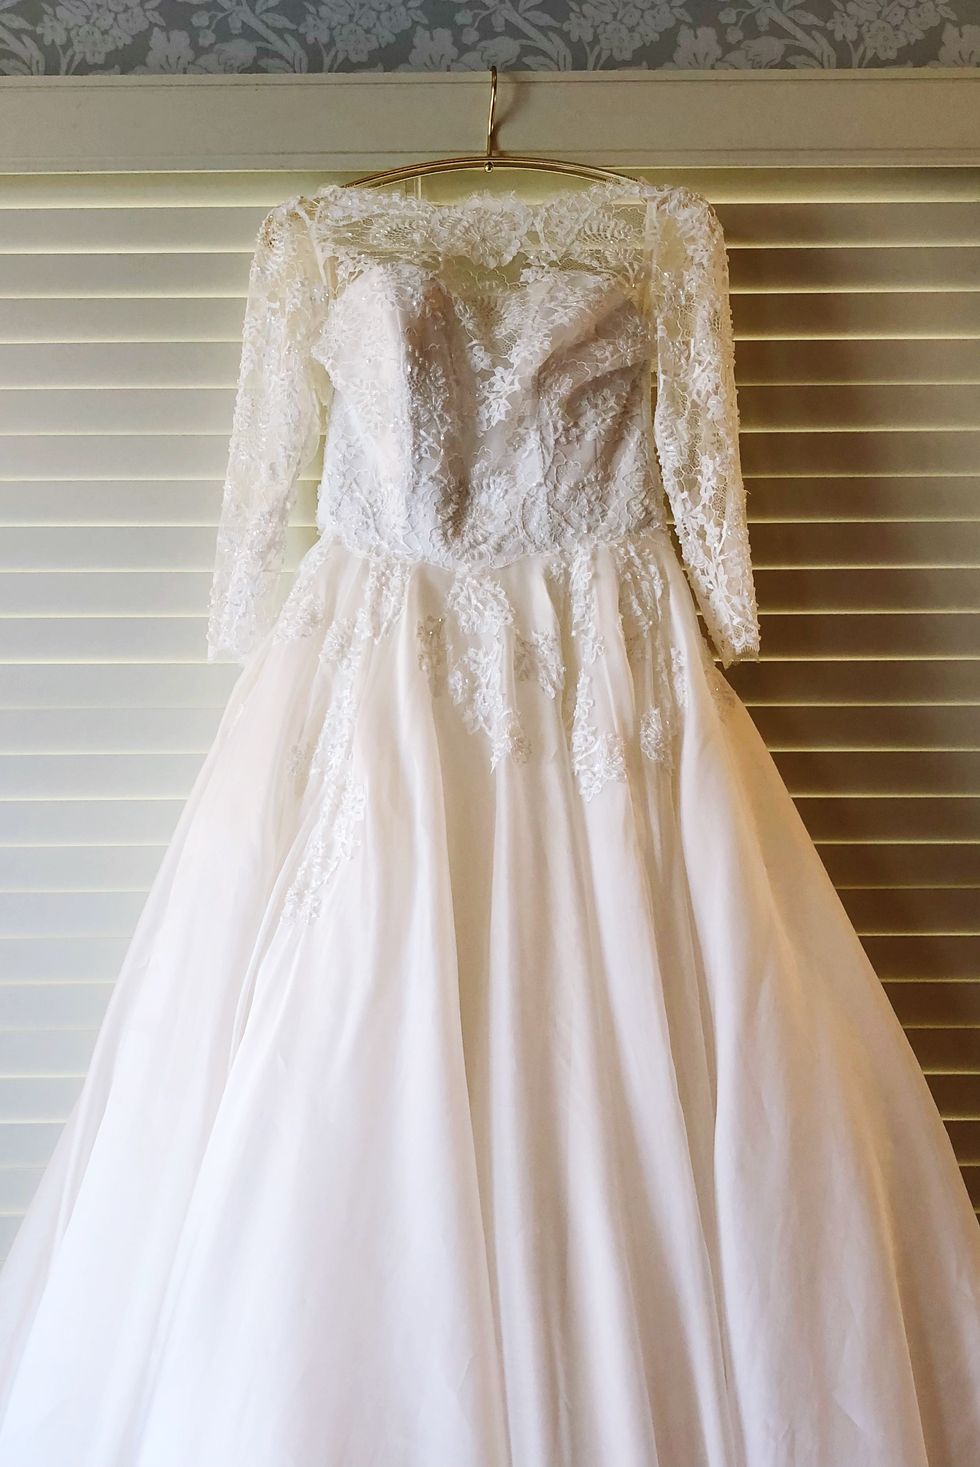 Close-Up Of Wedding Dress On Wall